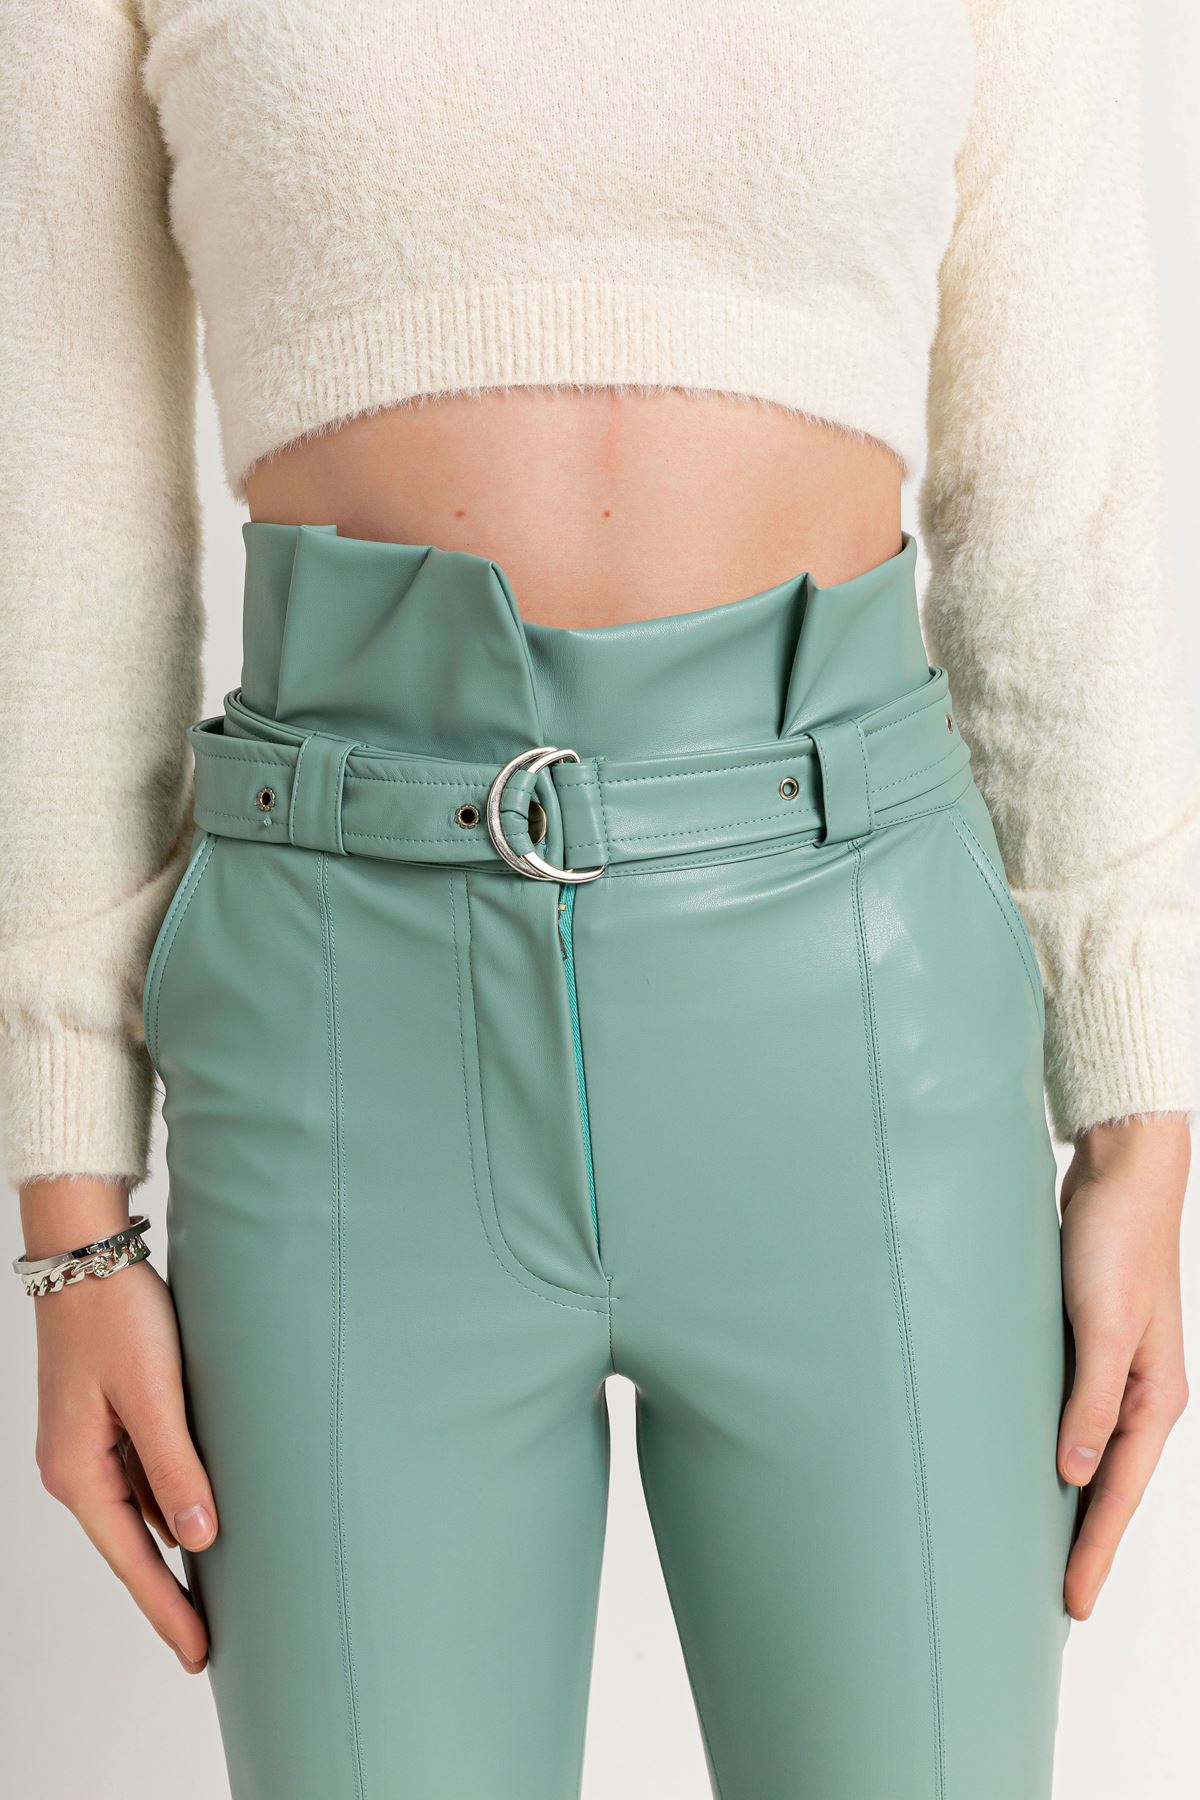 Leather Fabric Long Tigth Fit High Waist Belt Women'S Trouser - Mint